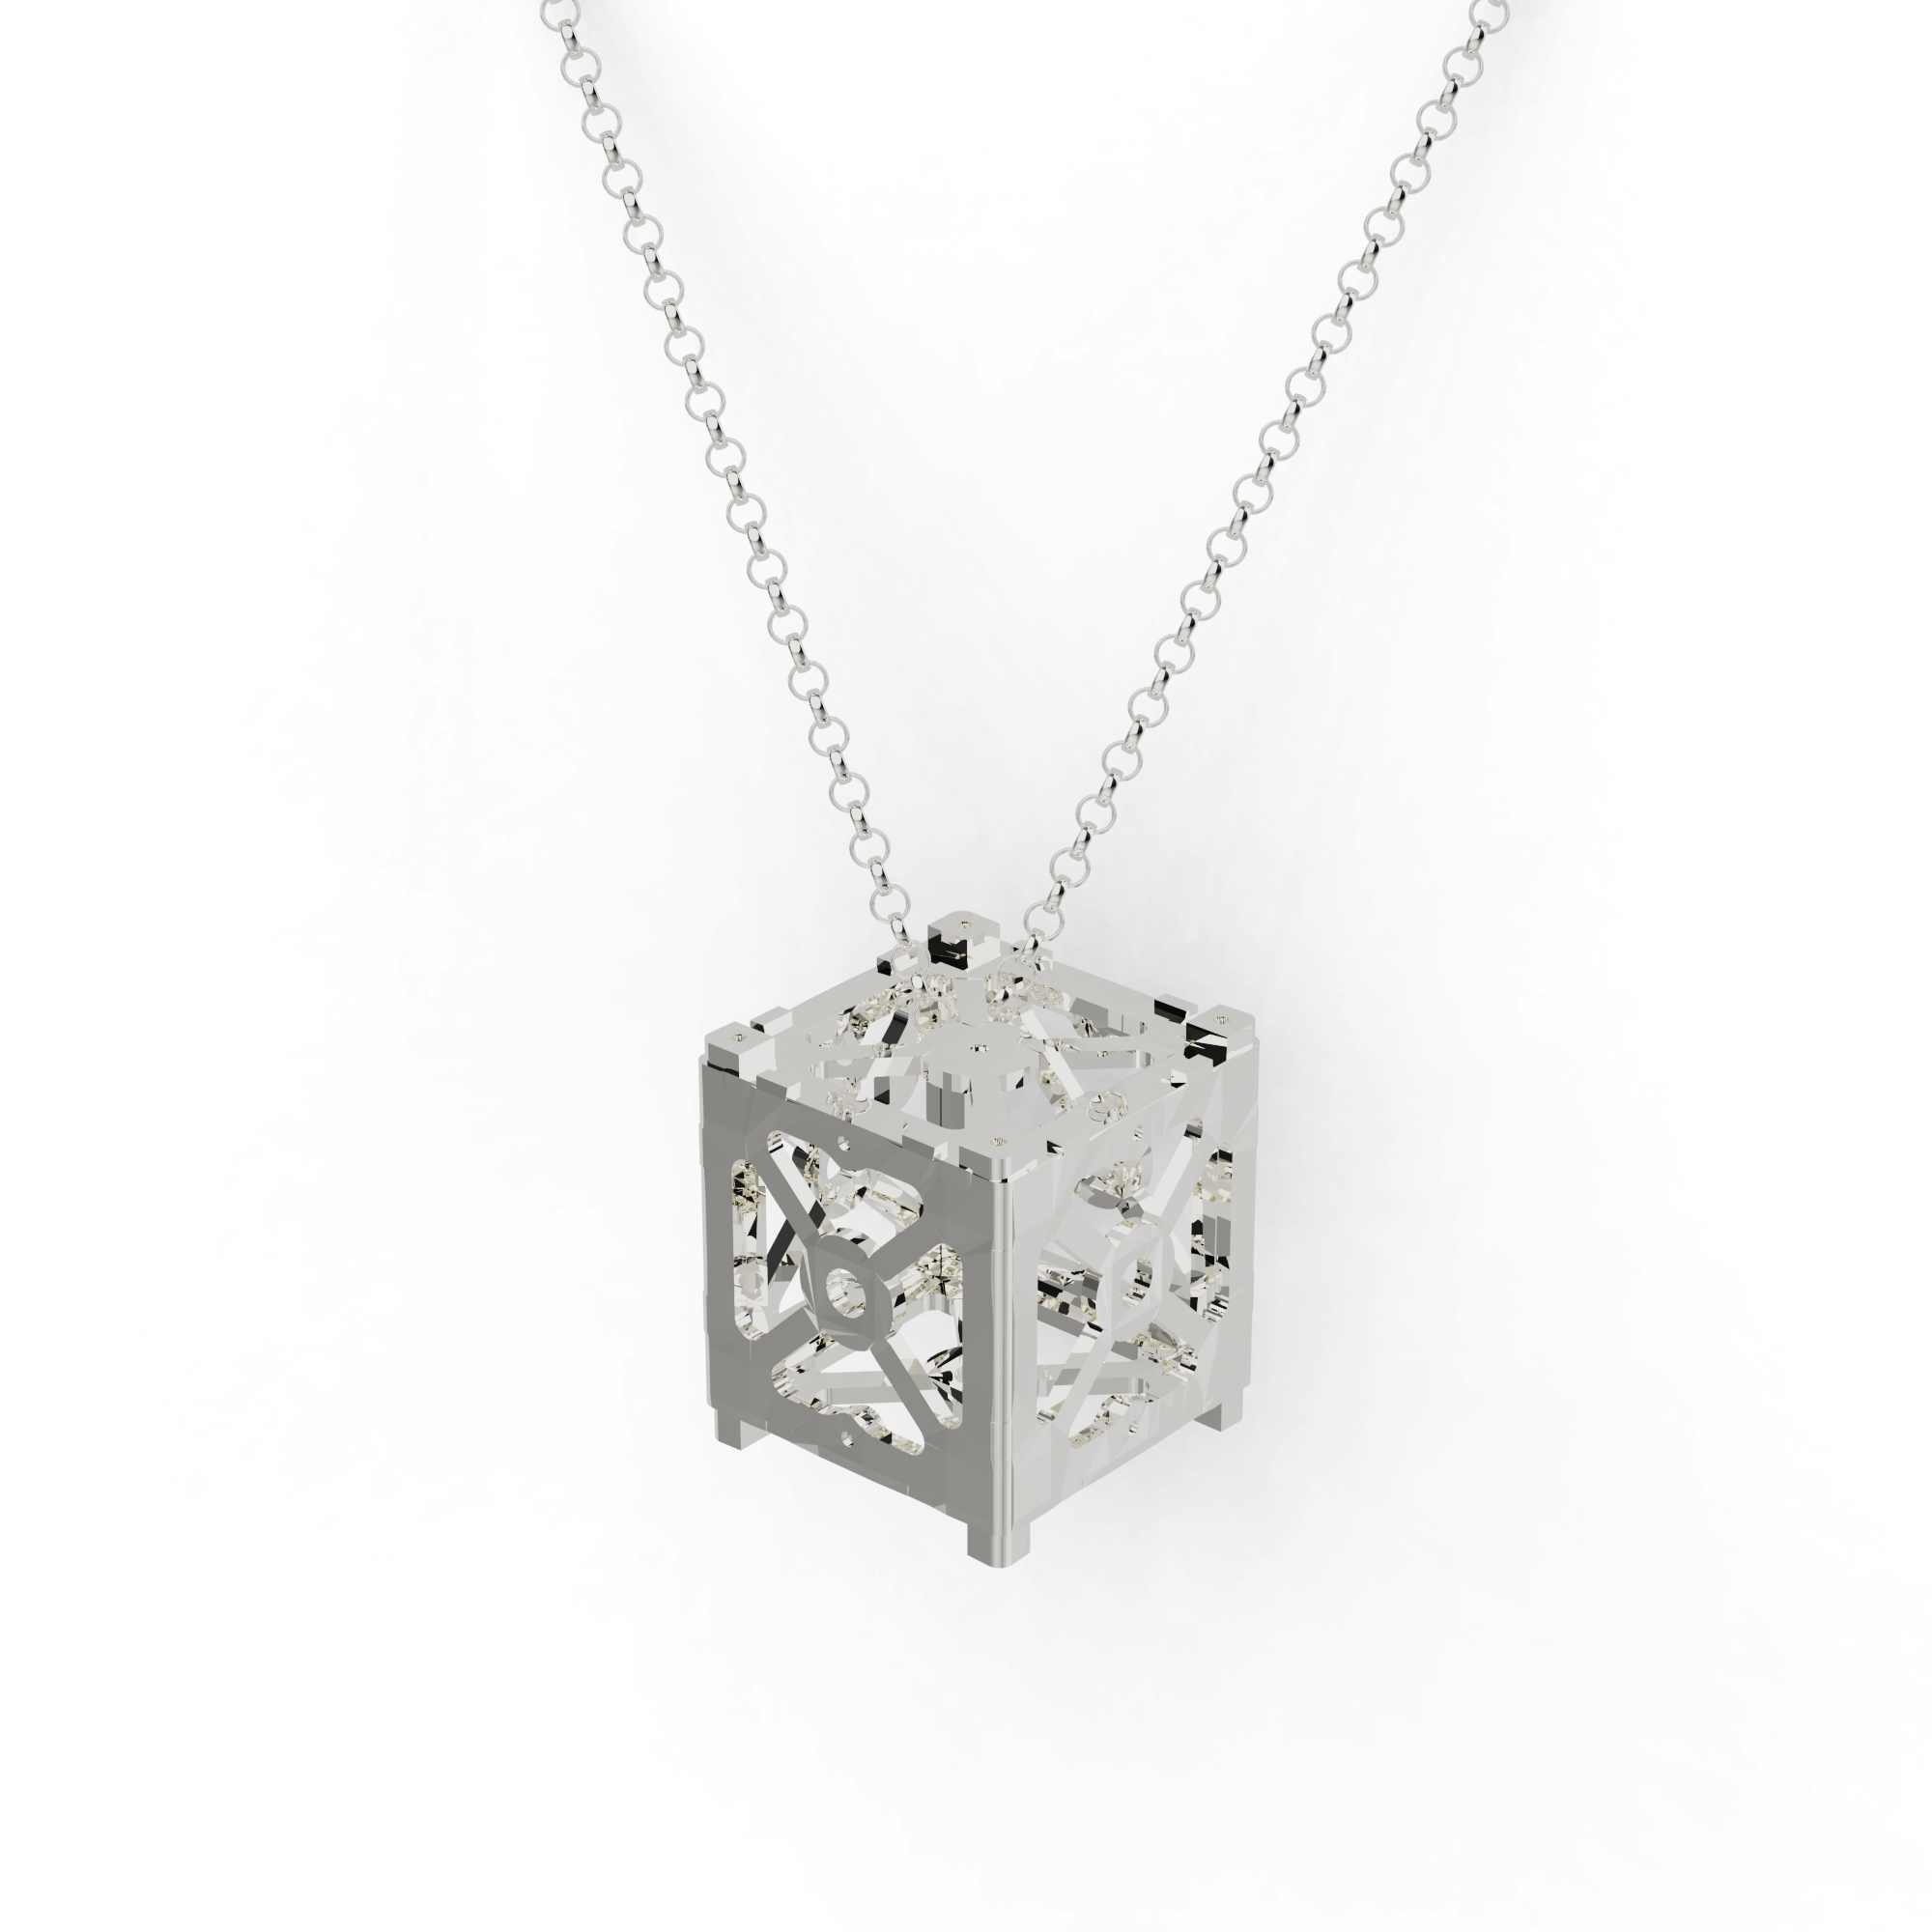 CubeSat necklace | silver